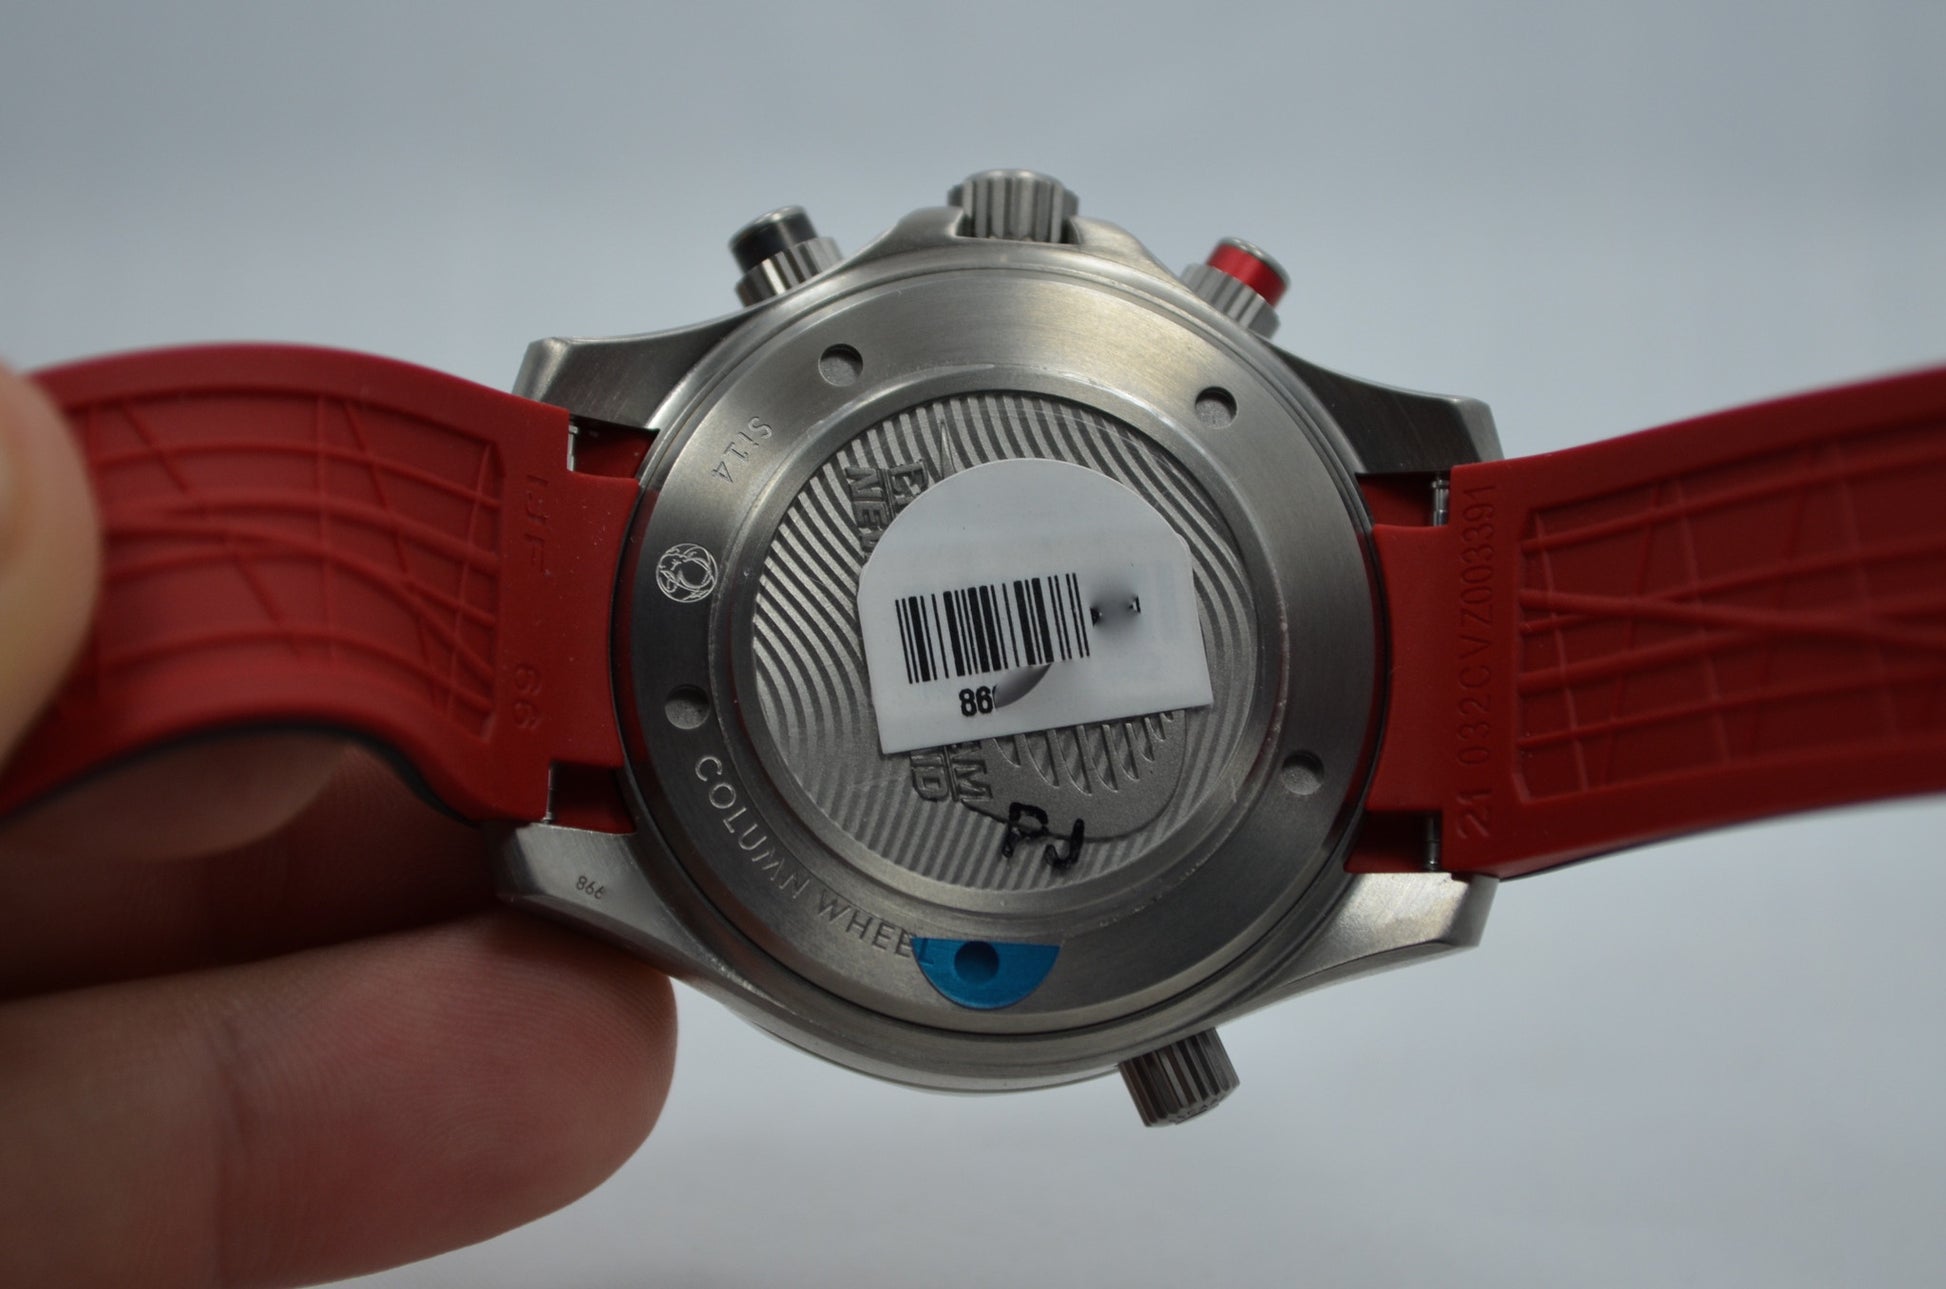 Omega Seamaster Professional ENTZ 300M Titanium 21292445099001 Chronograph Watch - Hashtag Watch Company